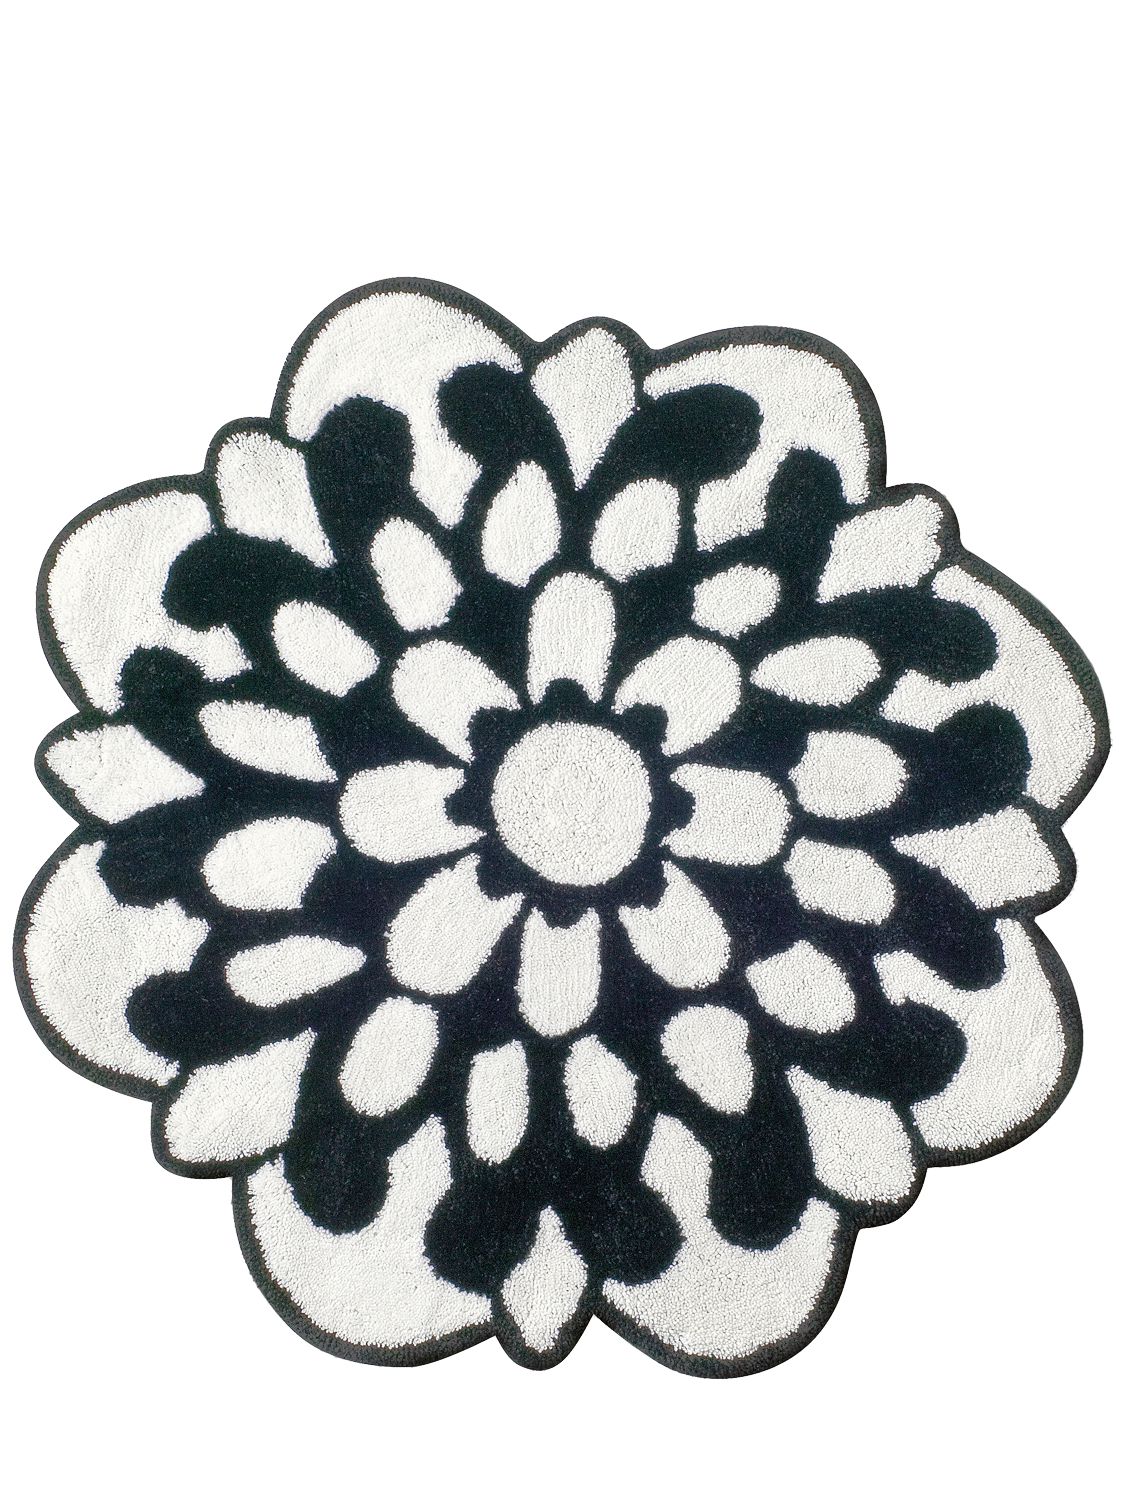 Missoni Otil Cotton Bathmat In Black/white